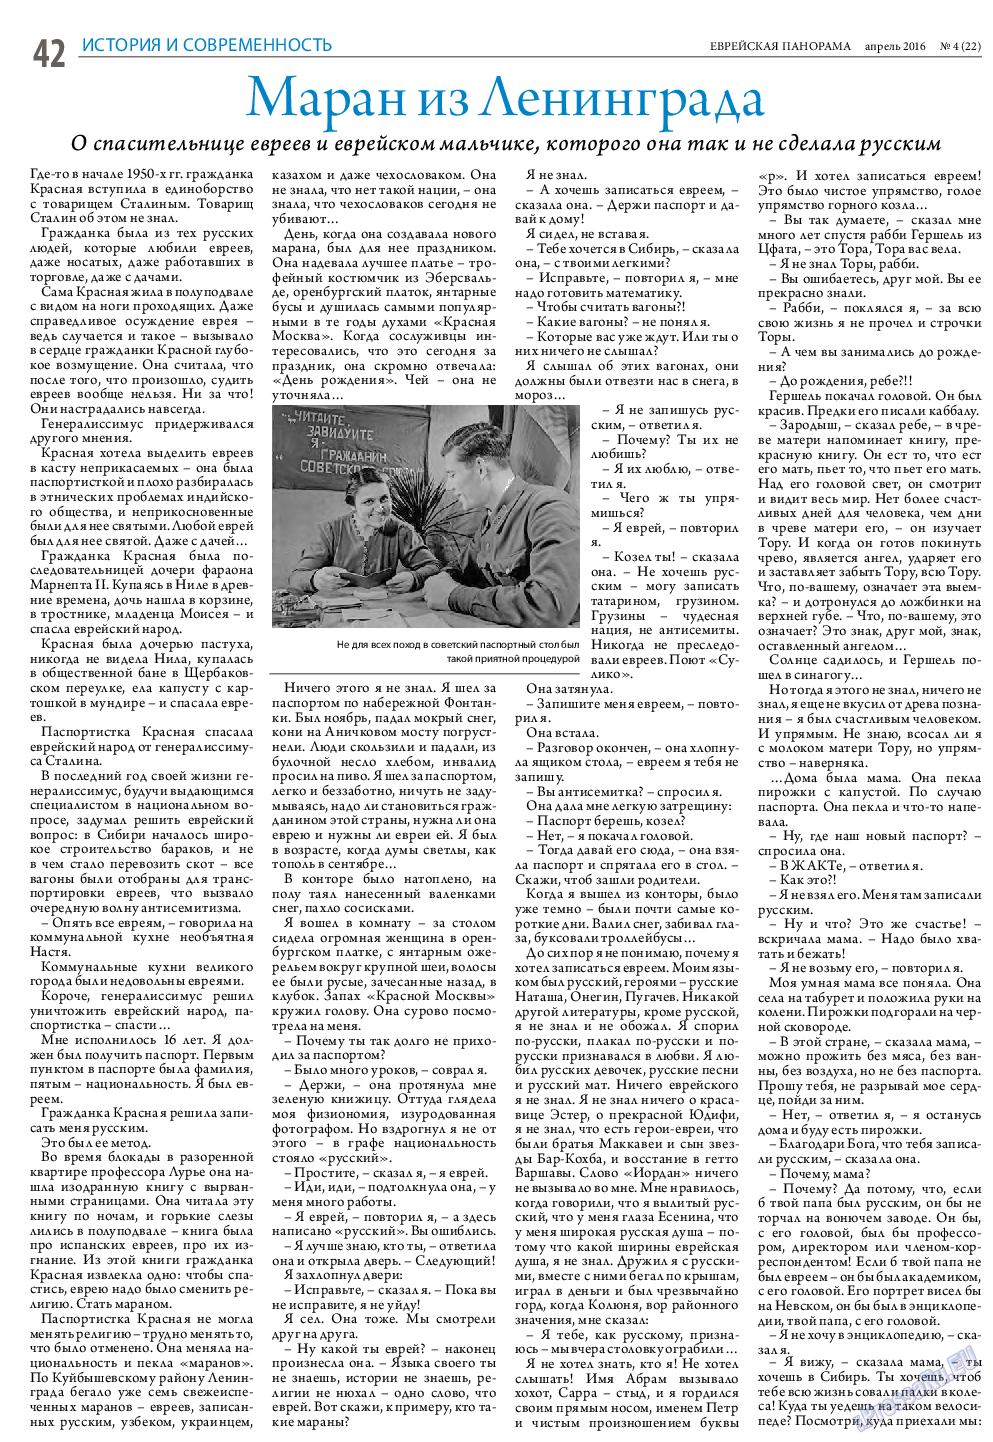 Еврейская панорама, газета. 2016 №4 стр.42